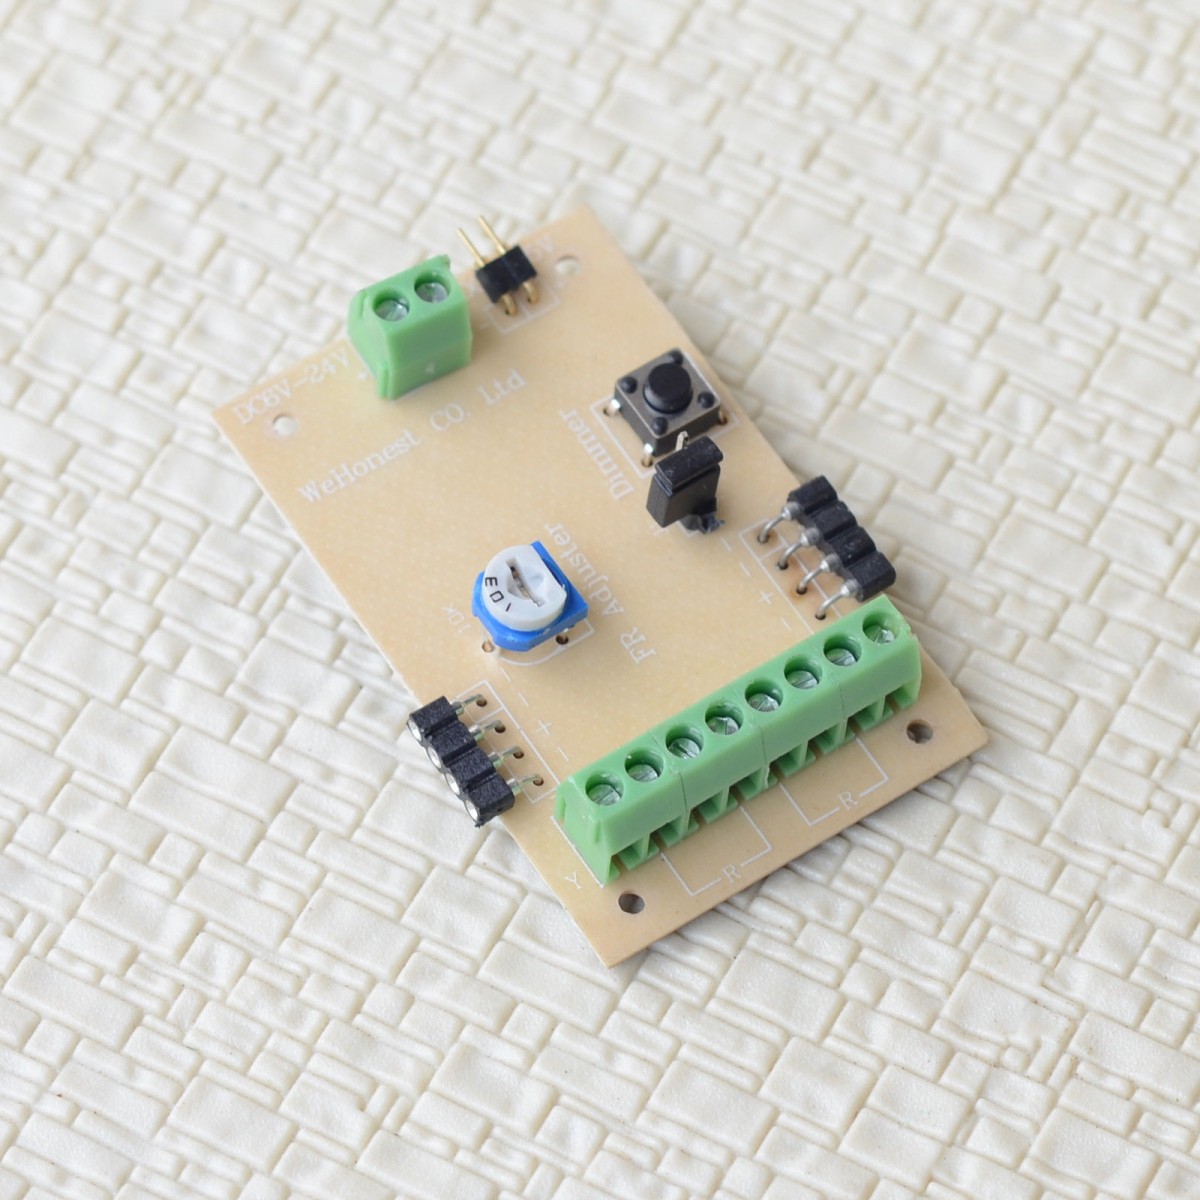 1 x grade crossing signal circuit board flasher blink rate adjustable UK/US/EU 